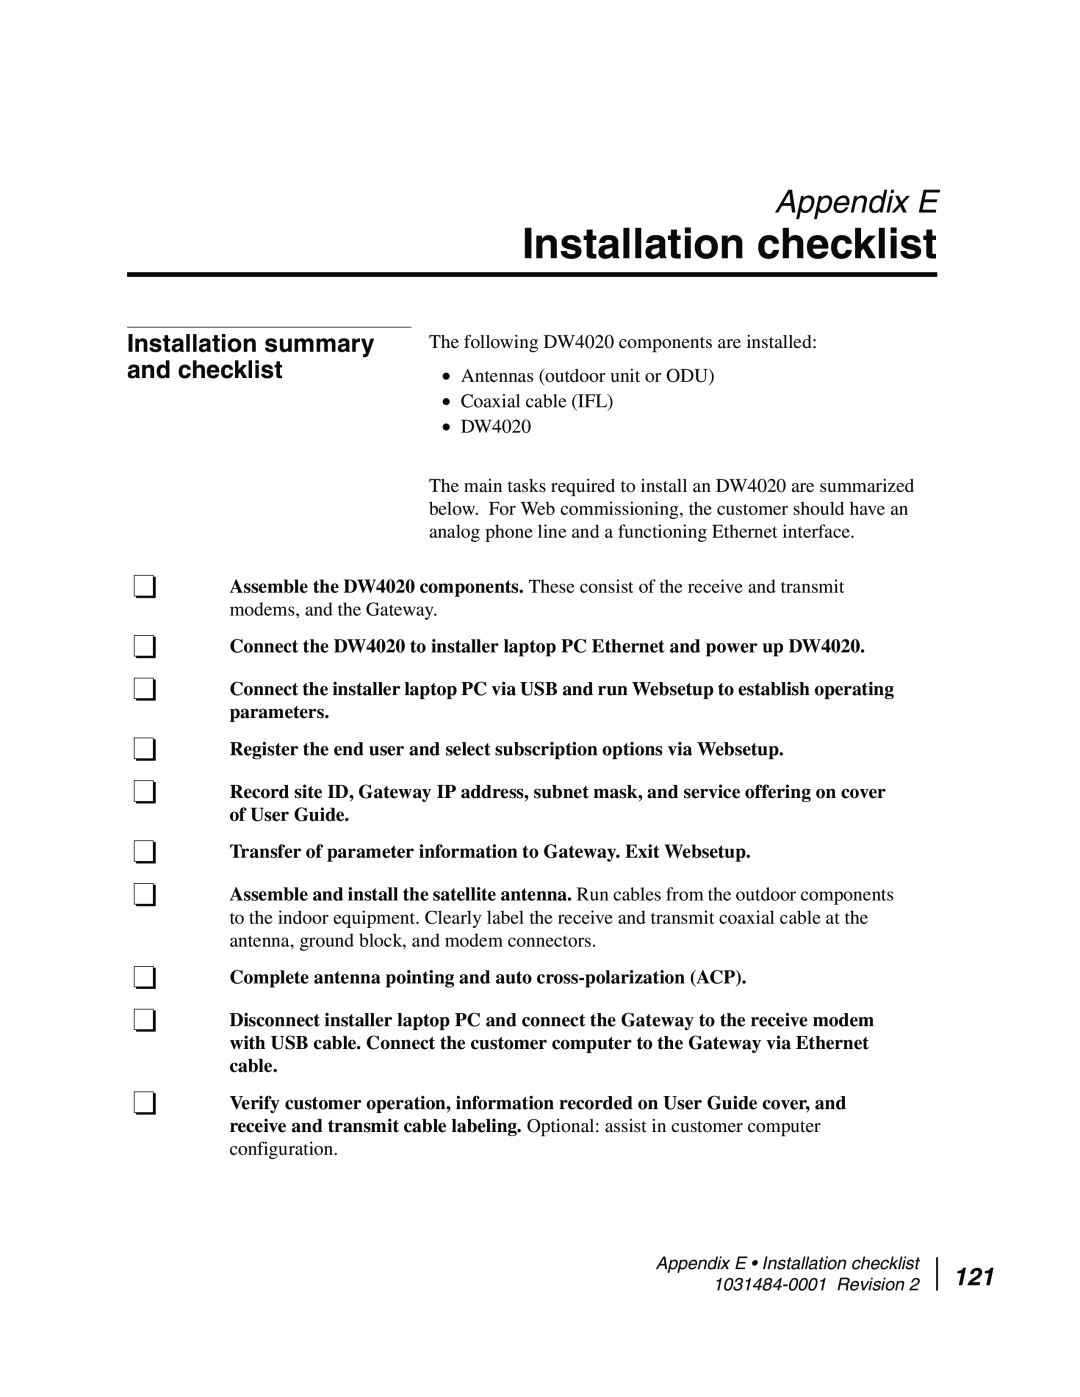 Hughes DW4020 manual Installation checklist, Appendix E, Installation summary and checklist 